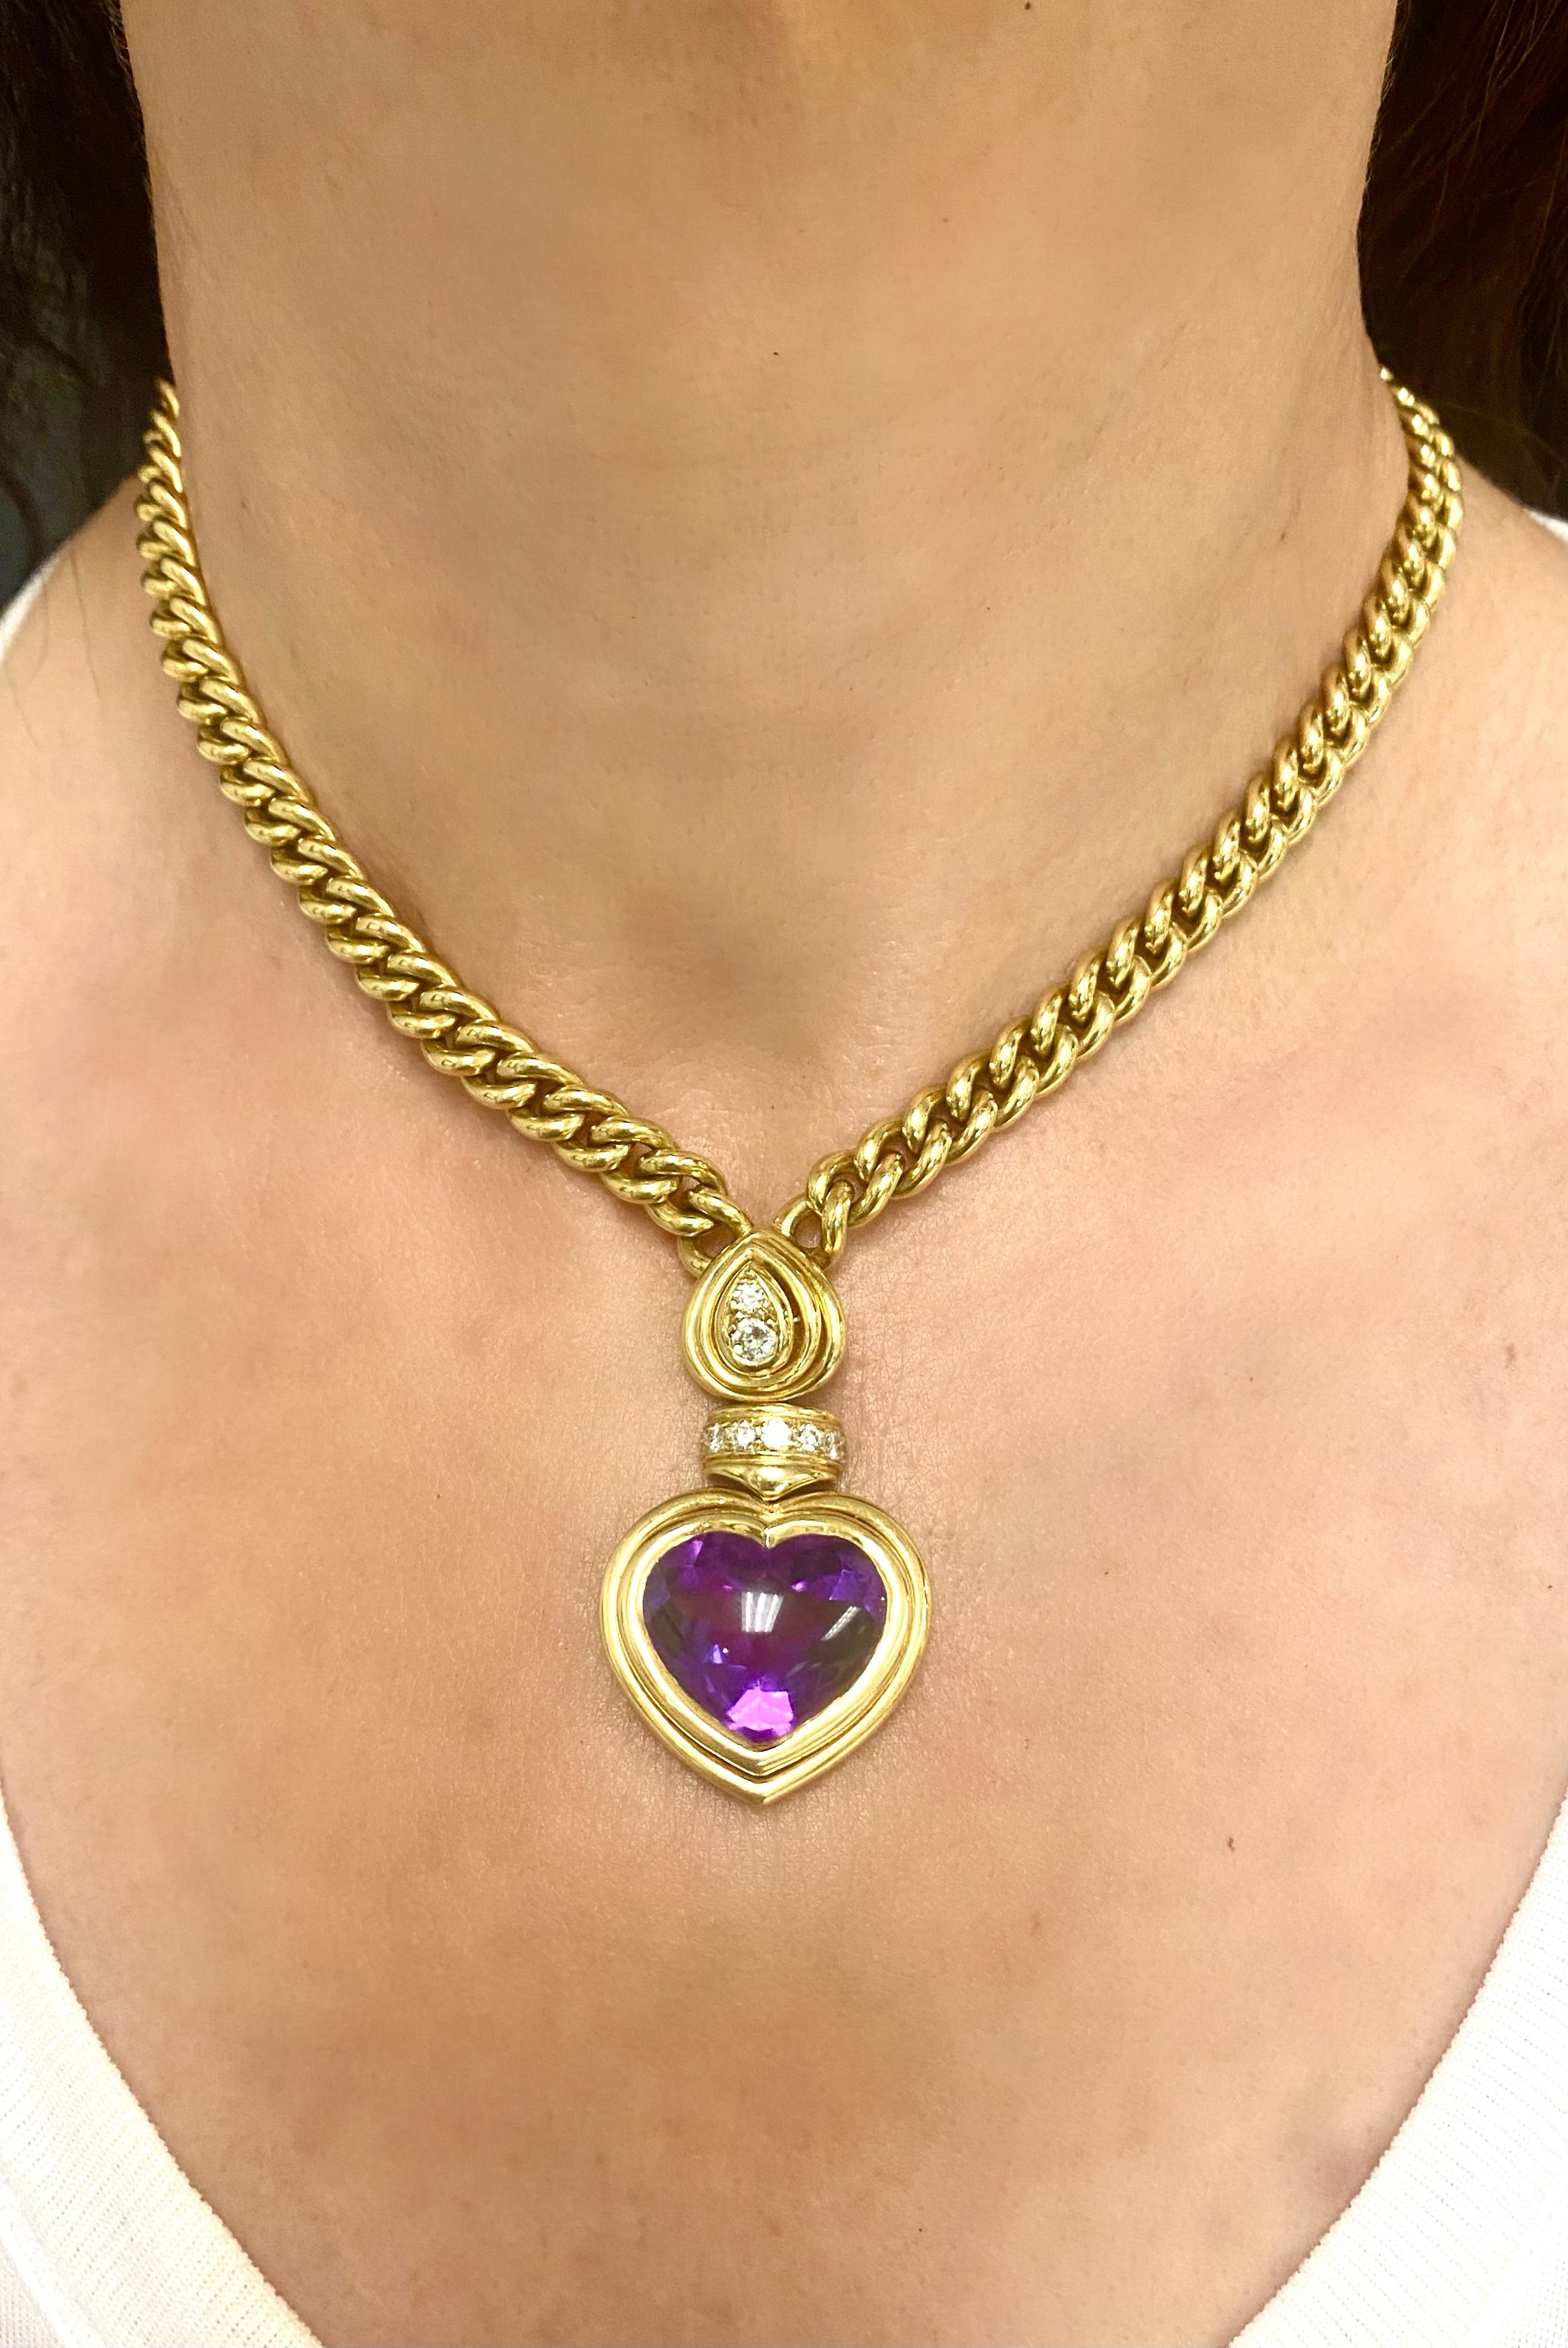 DESIGNER: Andre Vassort
CIRCA: 1980’s
MATERIALS: 18K Yellow Gold
GEMSTONE: Amethyst
WEIGHT: 105.9 grams
MEASUREMENTS: 15 x Heart Pendant  - 1 3/4” x 1”
HALLMARKS: 750

A stunning 18k gold necklace by Andre Vassort, featuring amethyst and diamonds.